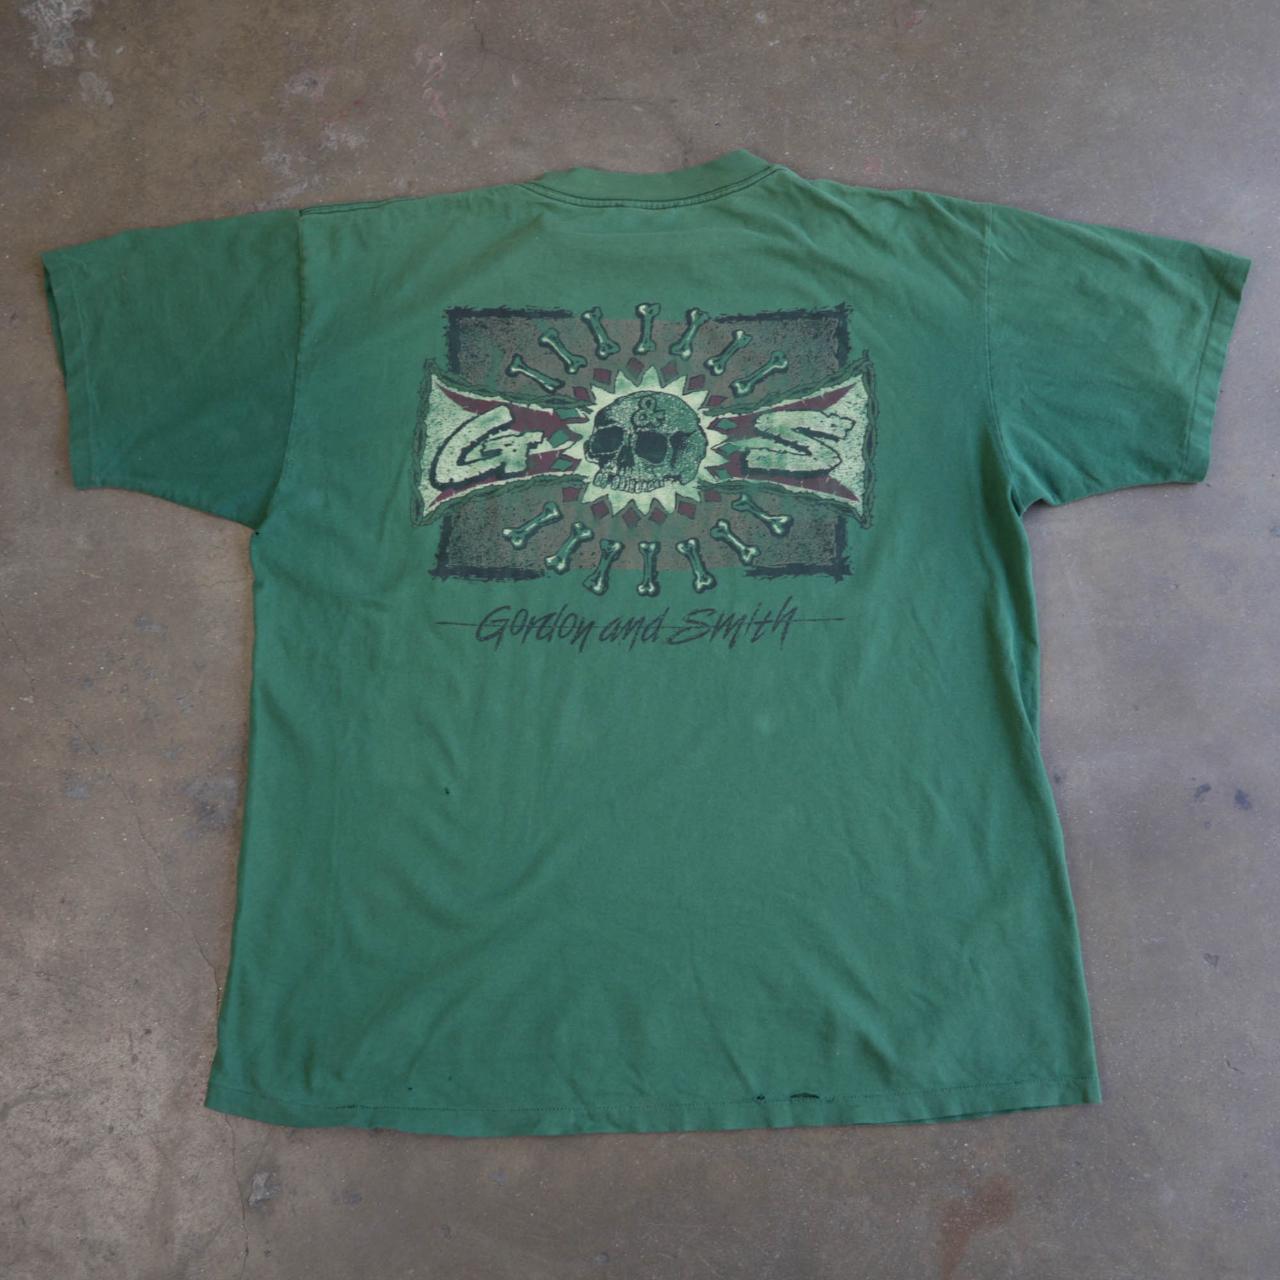 Gordon Smith Men's Green and Black T-shirt | Depop